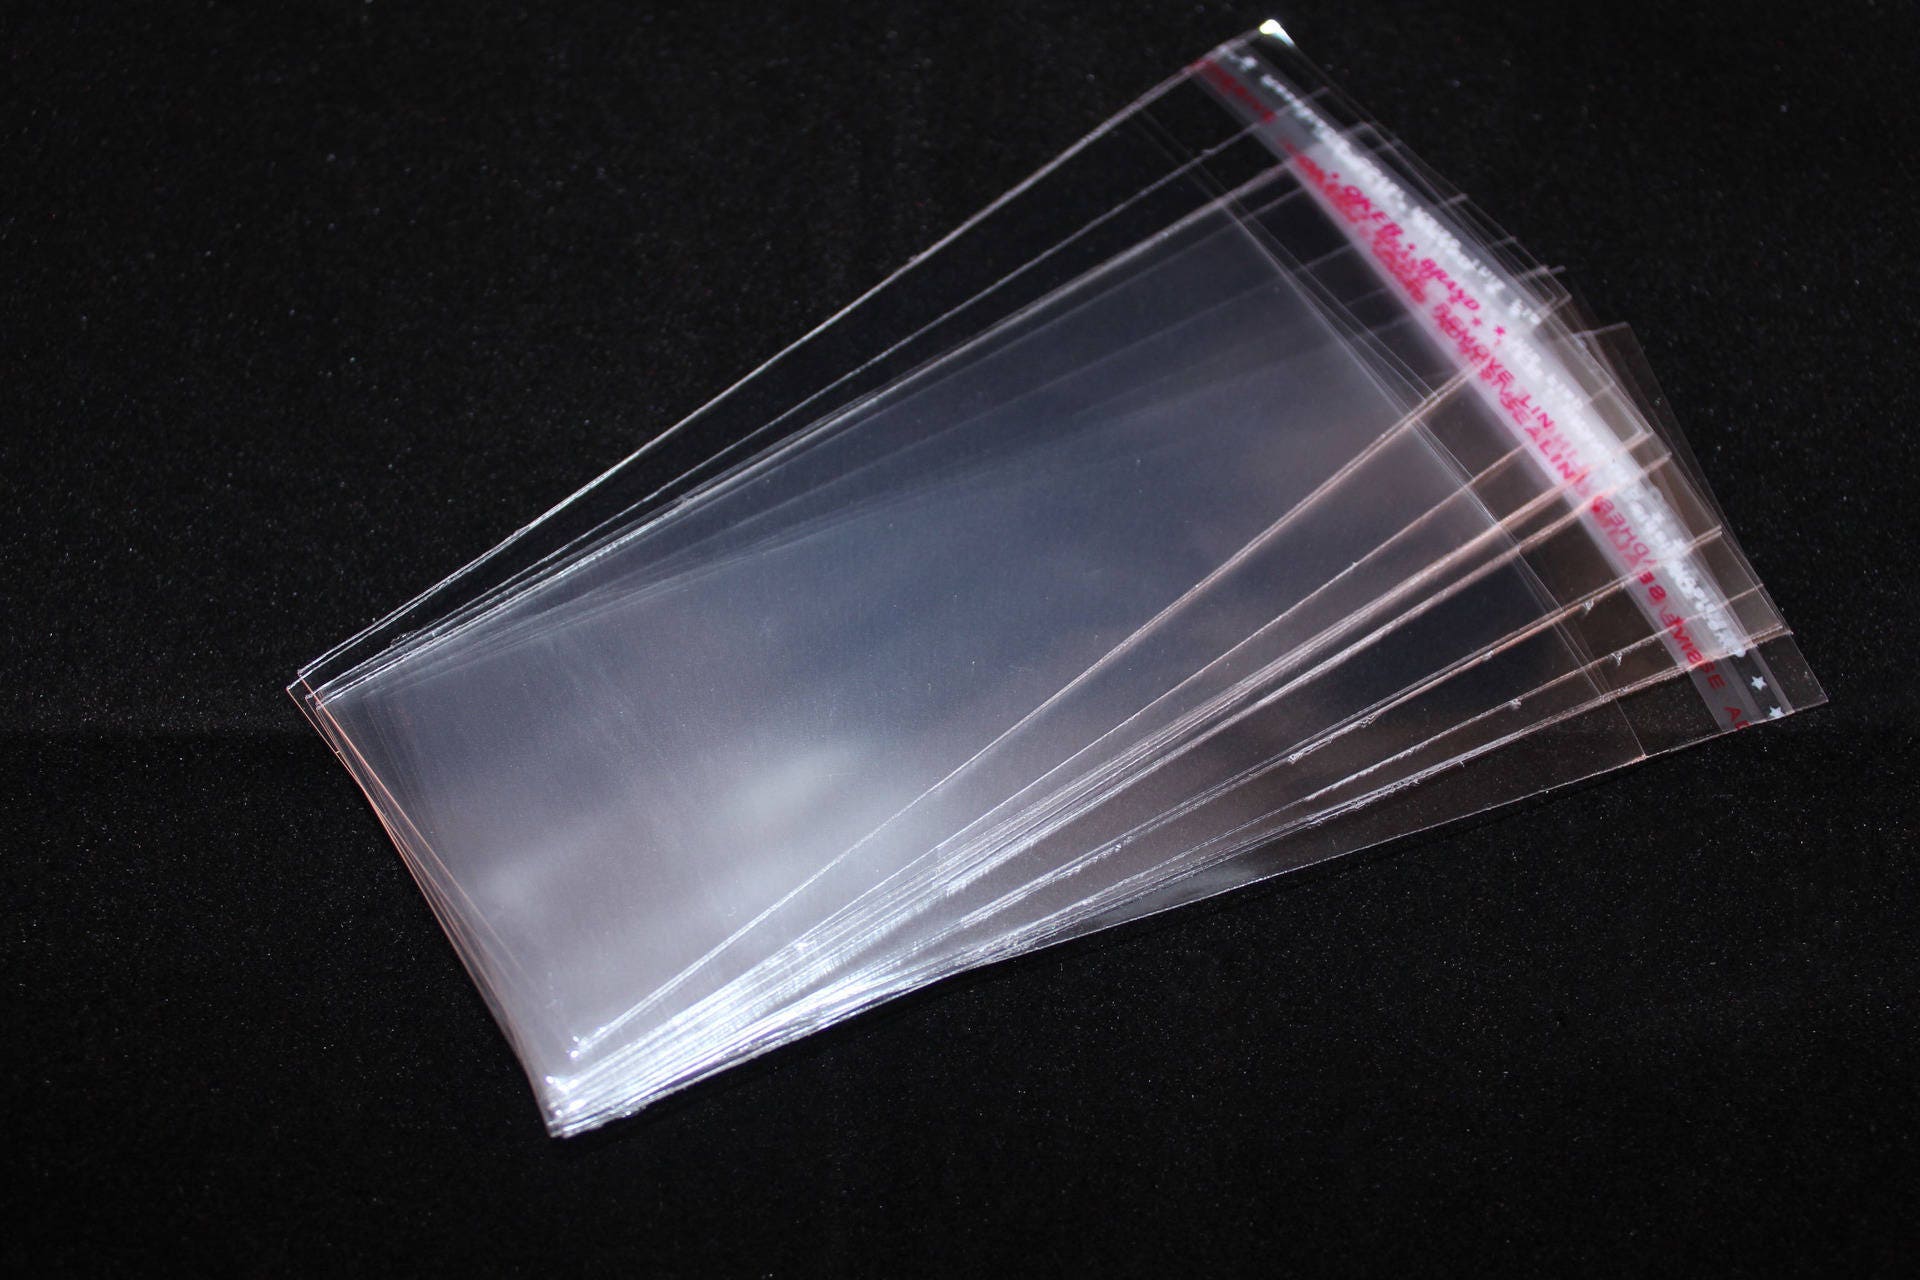 30X Clear Plastic Self Adhesive Seal Bag, 8cm X 16cm Cello